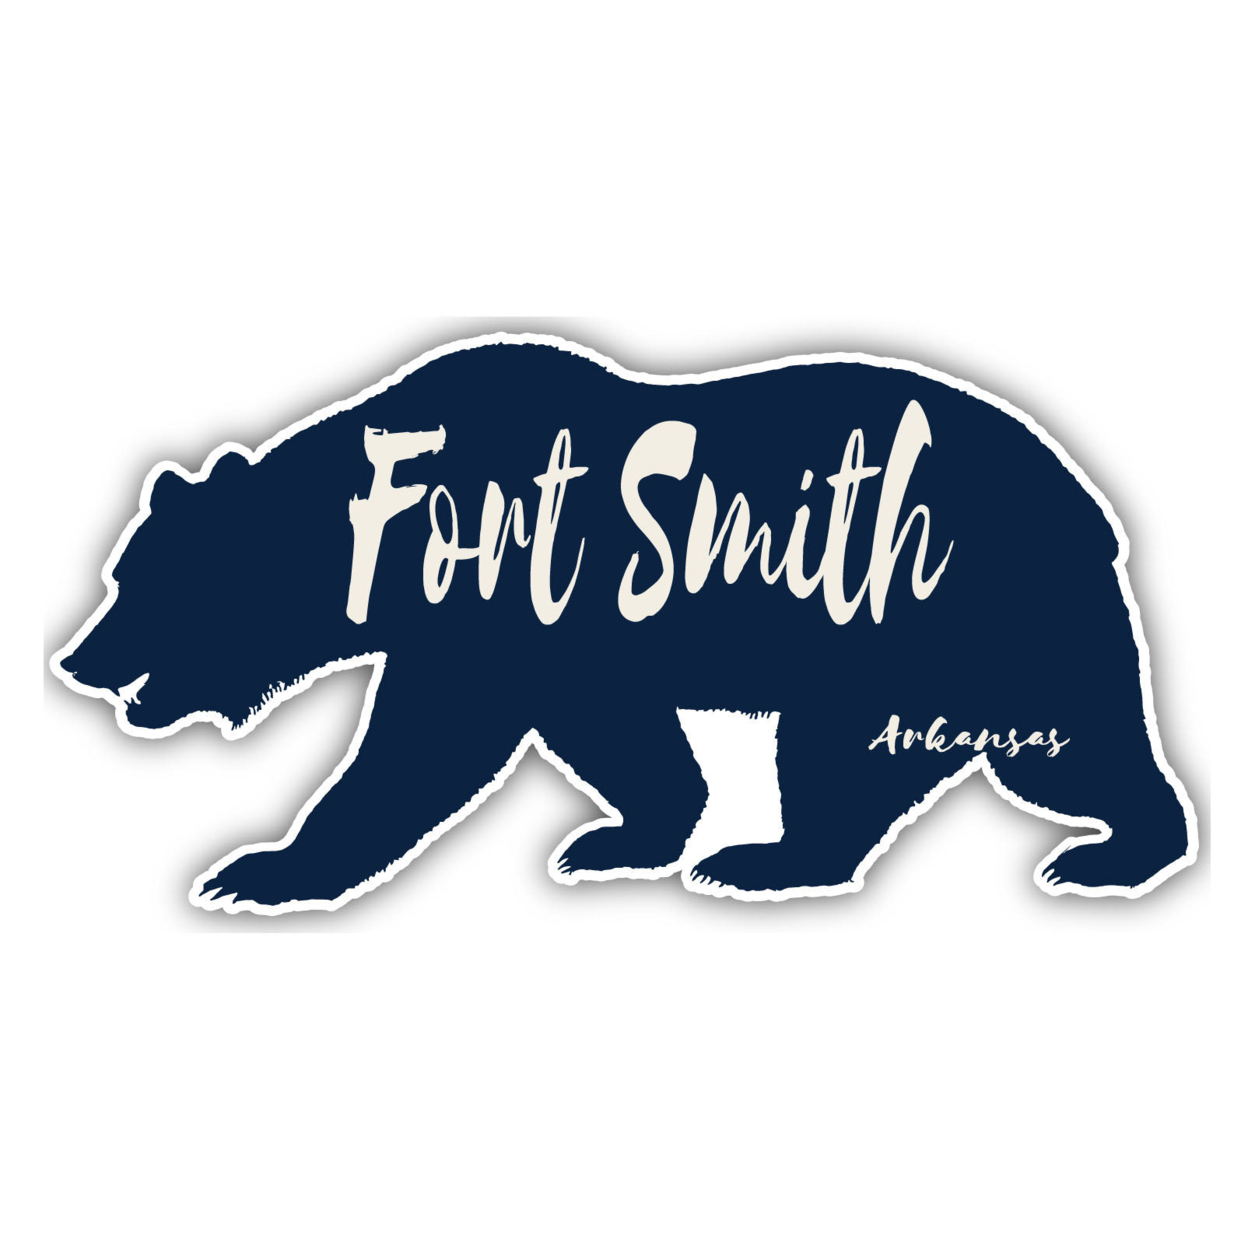 Fort Smith Arkansas Souvenir Decorative Stickers (Choose Theme And Size) - Single Unit, 10-Inch, Bear